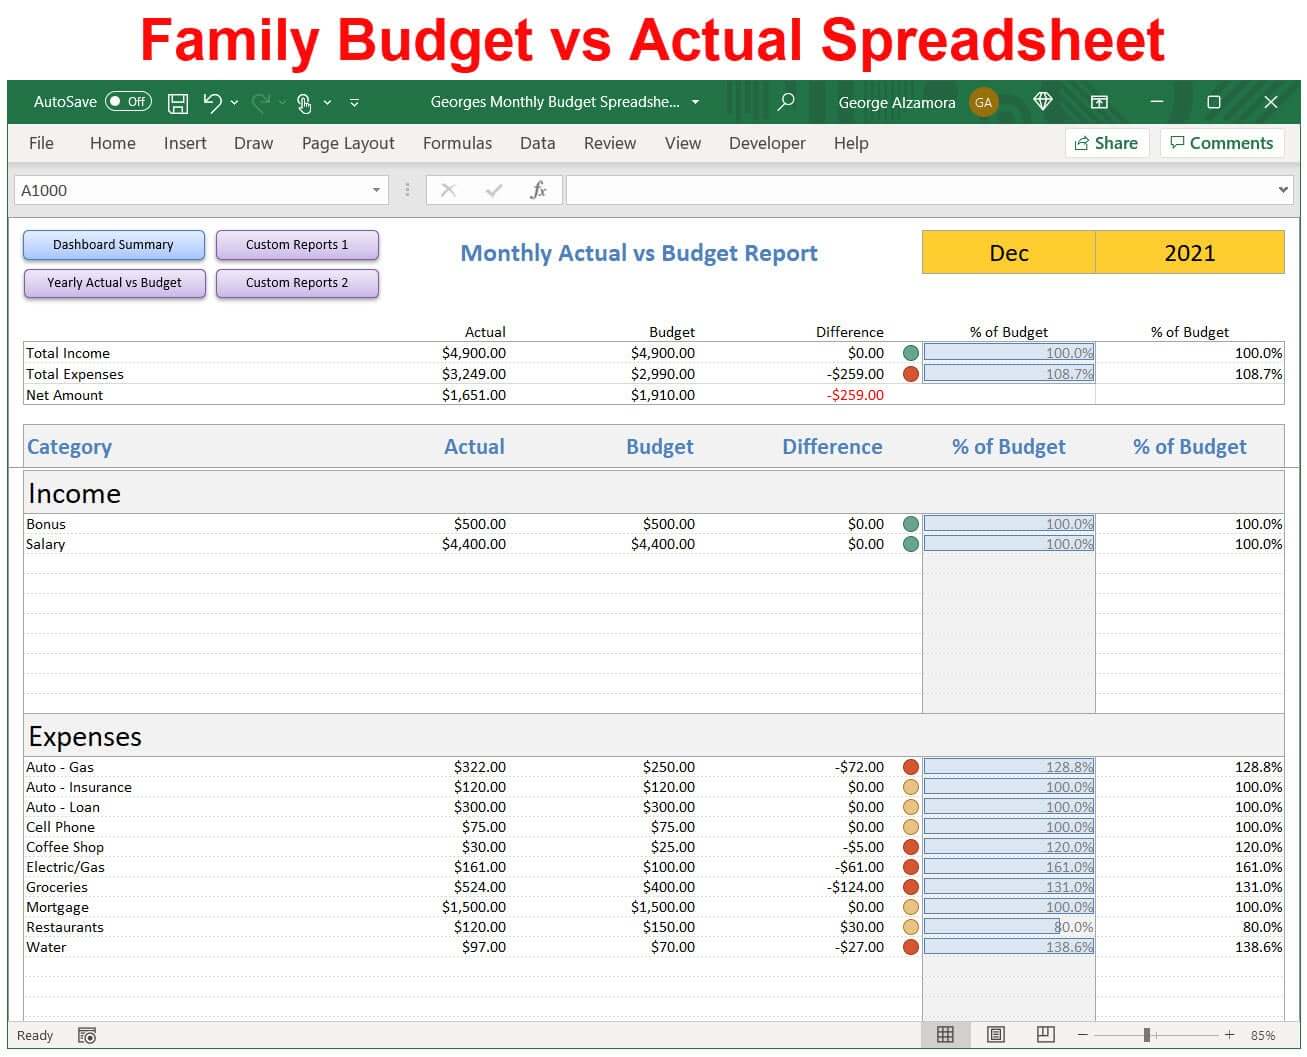 Family budget vs actual spreadsheet templates